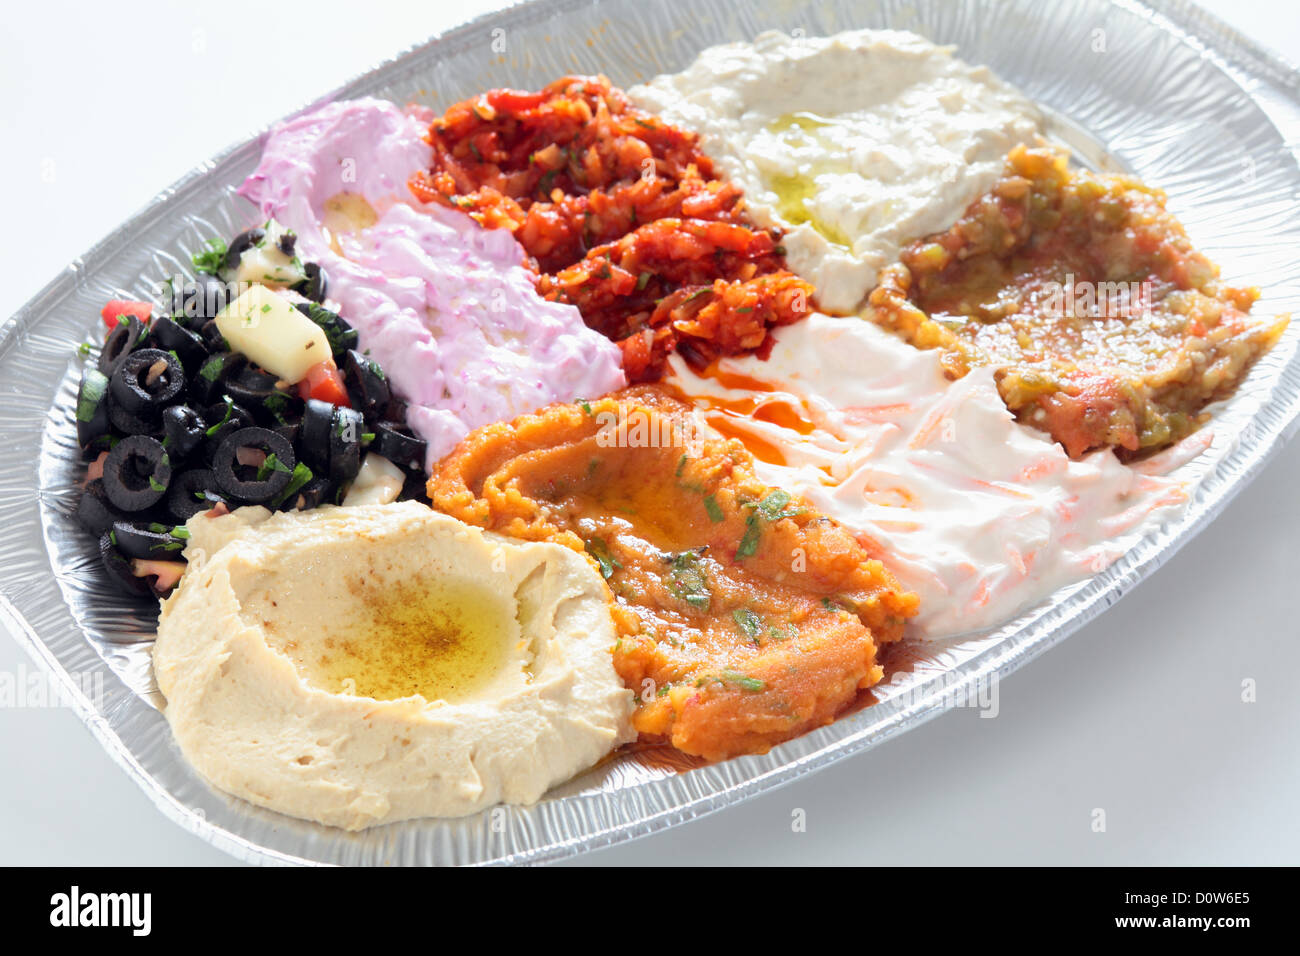 A restaurant take-away plate of Turkish or Arab mezzes, Stock Photo